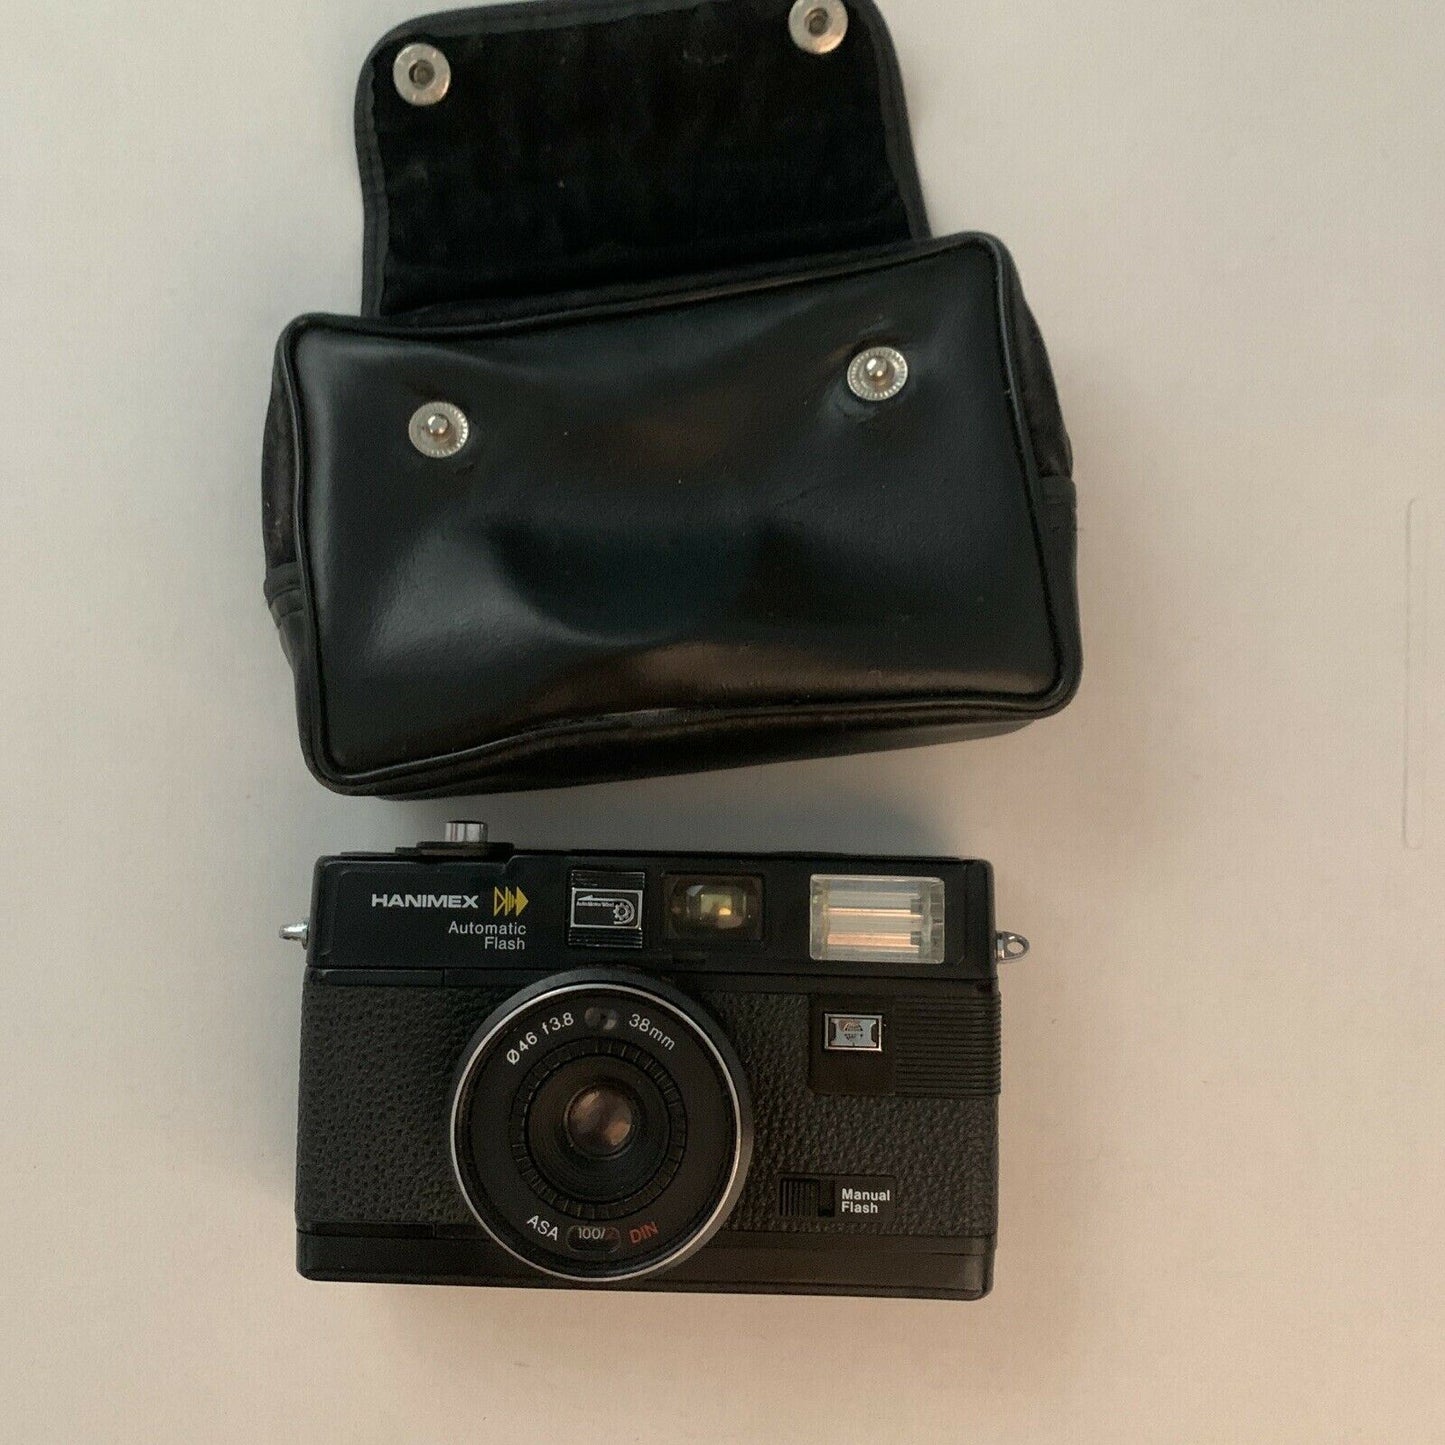 Hanimex 35 MS Automatic Flash 35mm Film Camera